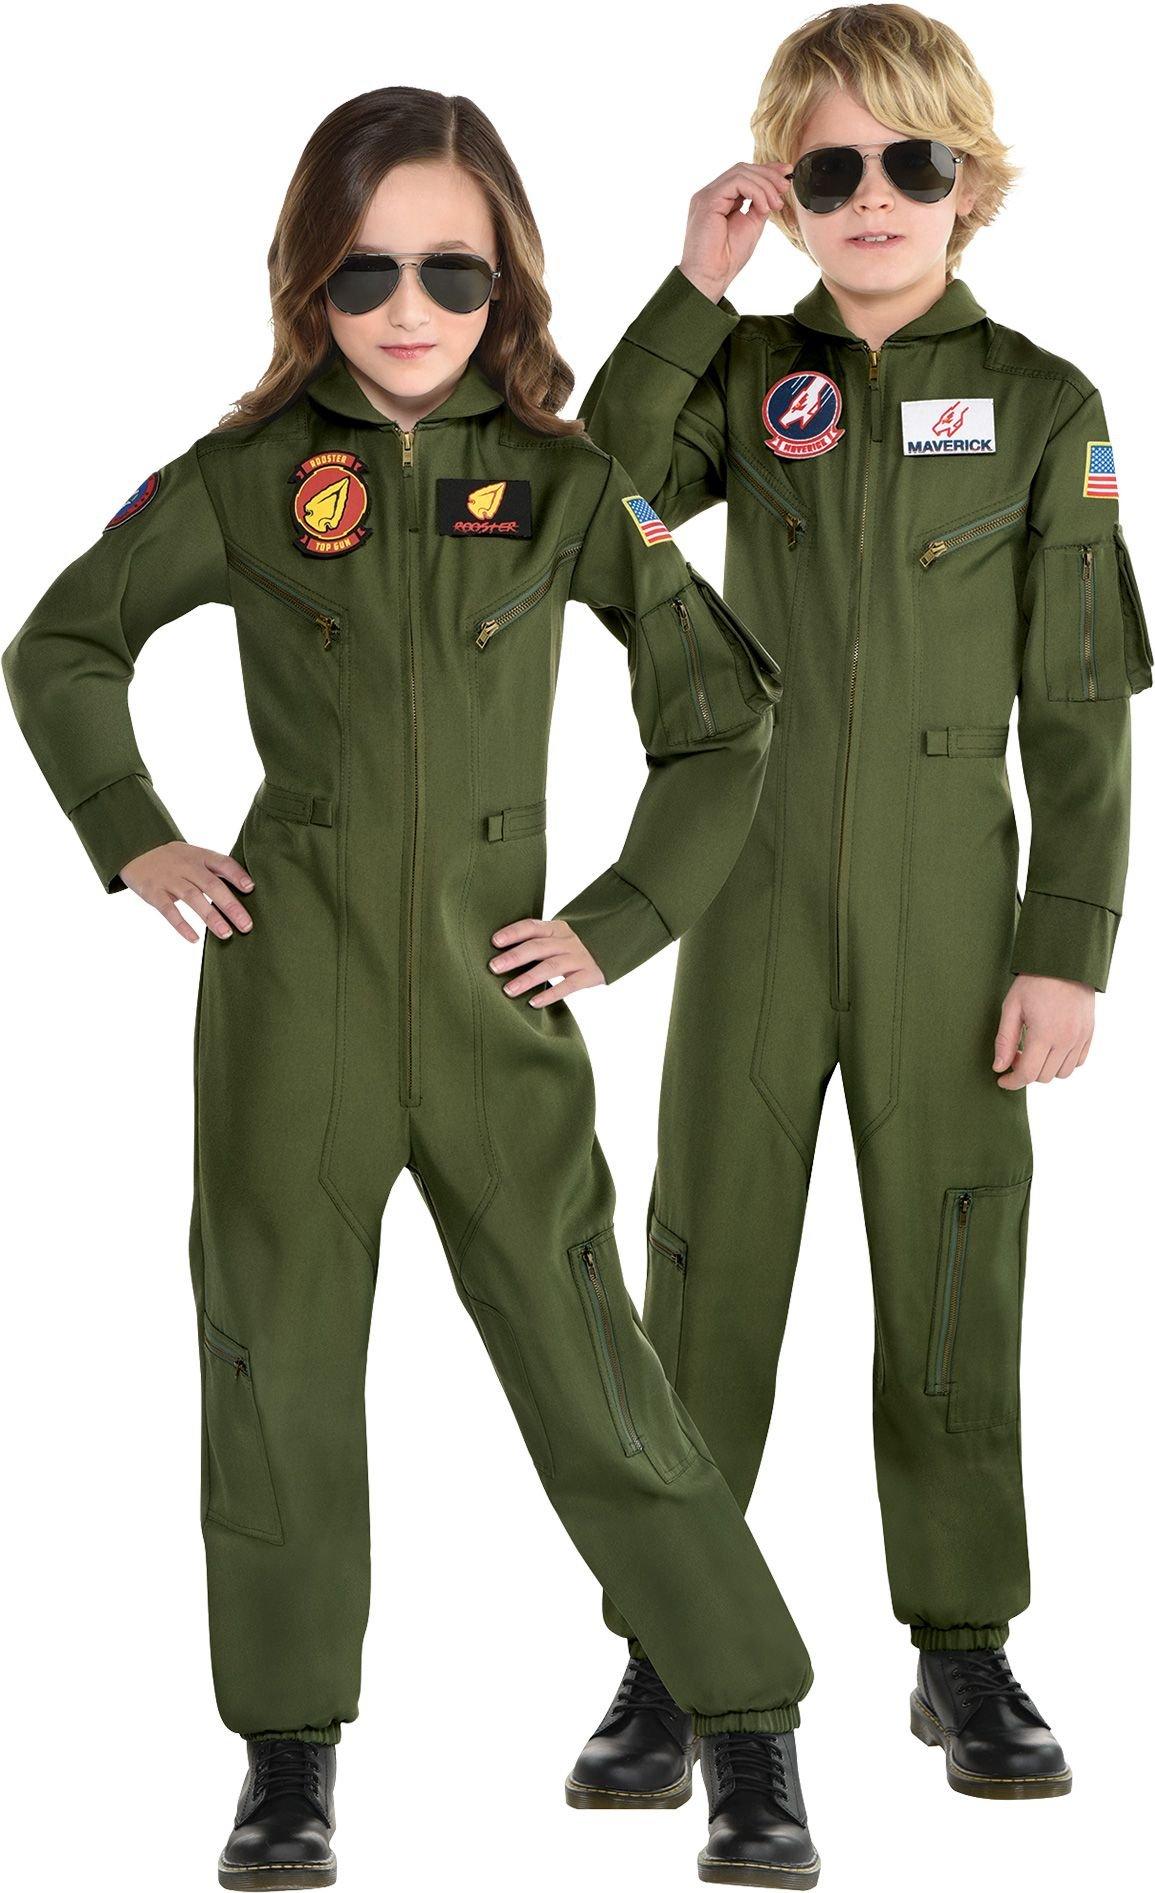 Maverick Flight Suit Costume for Kids - Top Gun 2